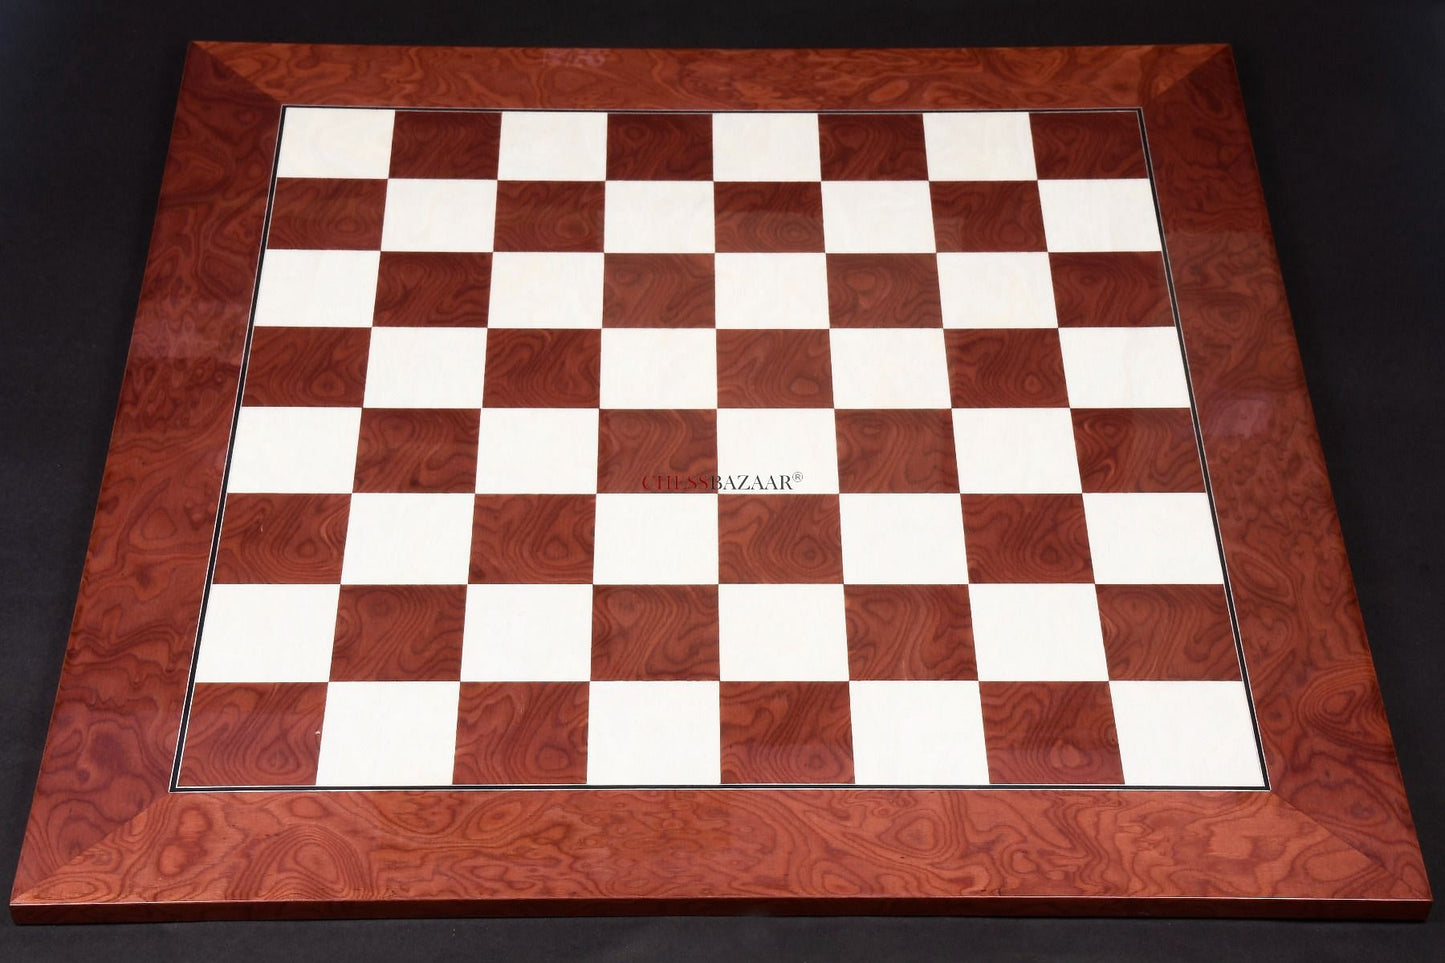 Wooden Red Ash Burl Maple Hi Gloss Finish Chess Board 22" - 55 mm